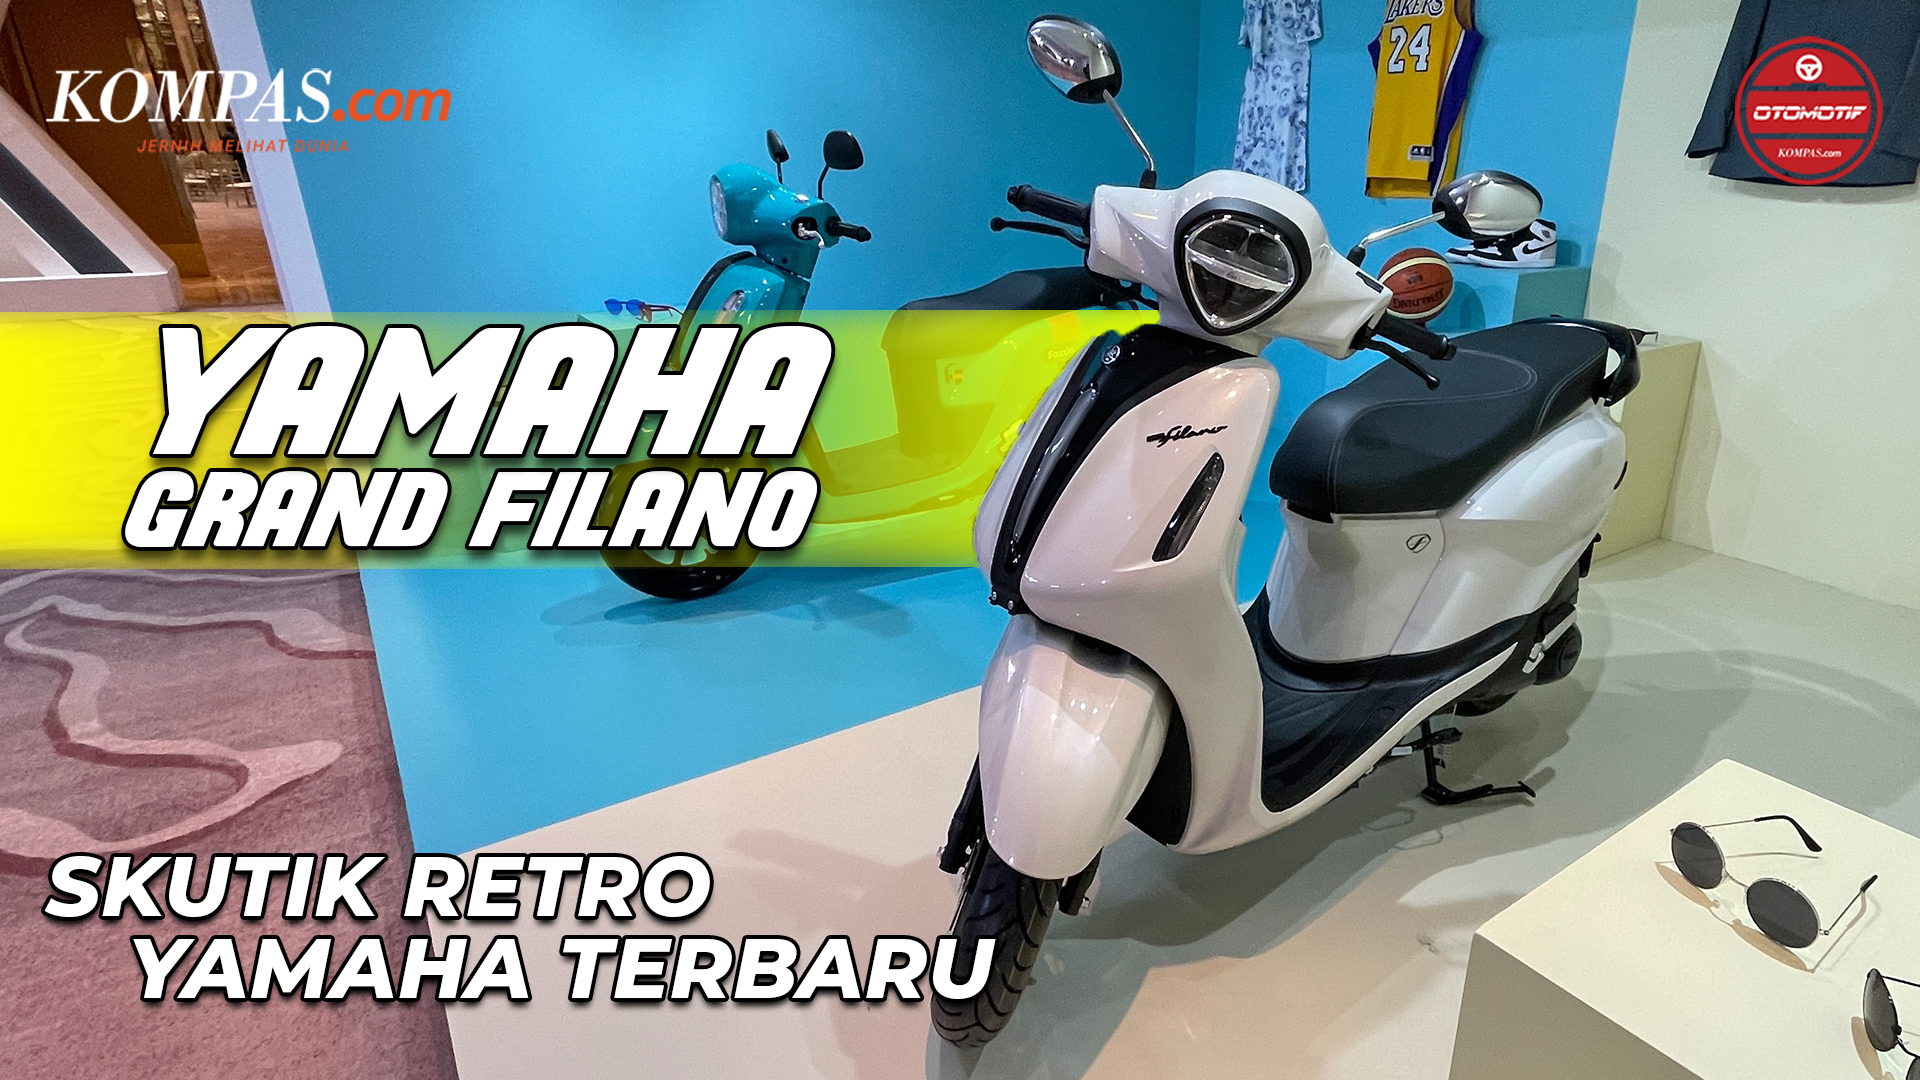 REVIEW | Yamaha Grand Filano, Skutik Retro Yamaha Terbaru